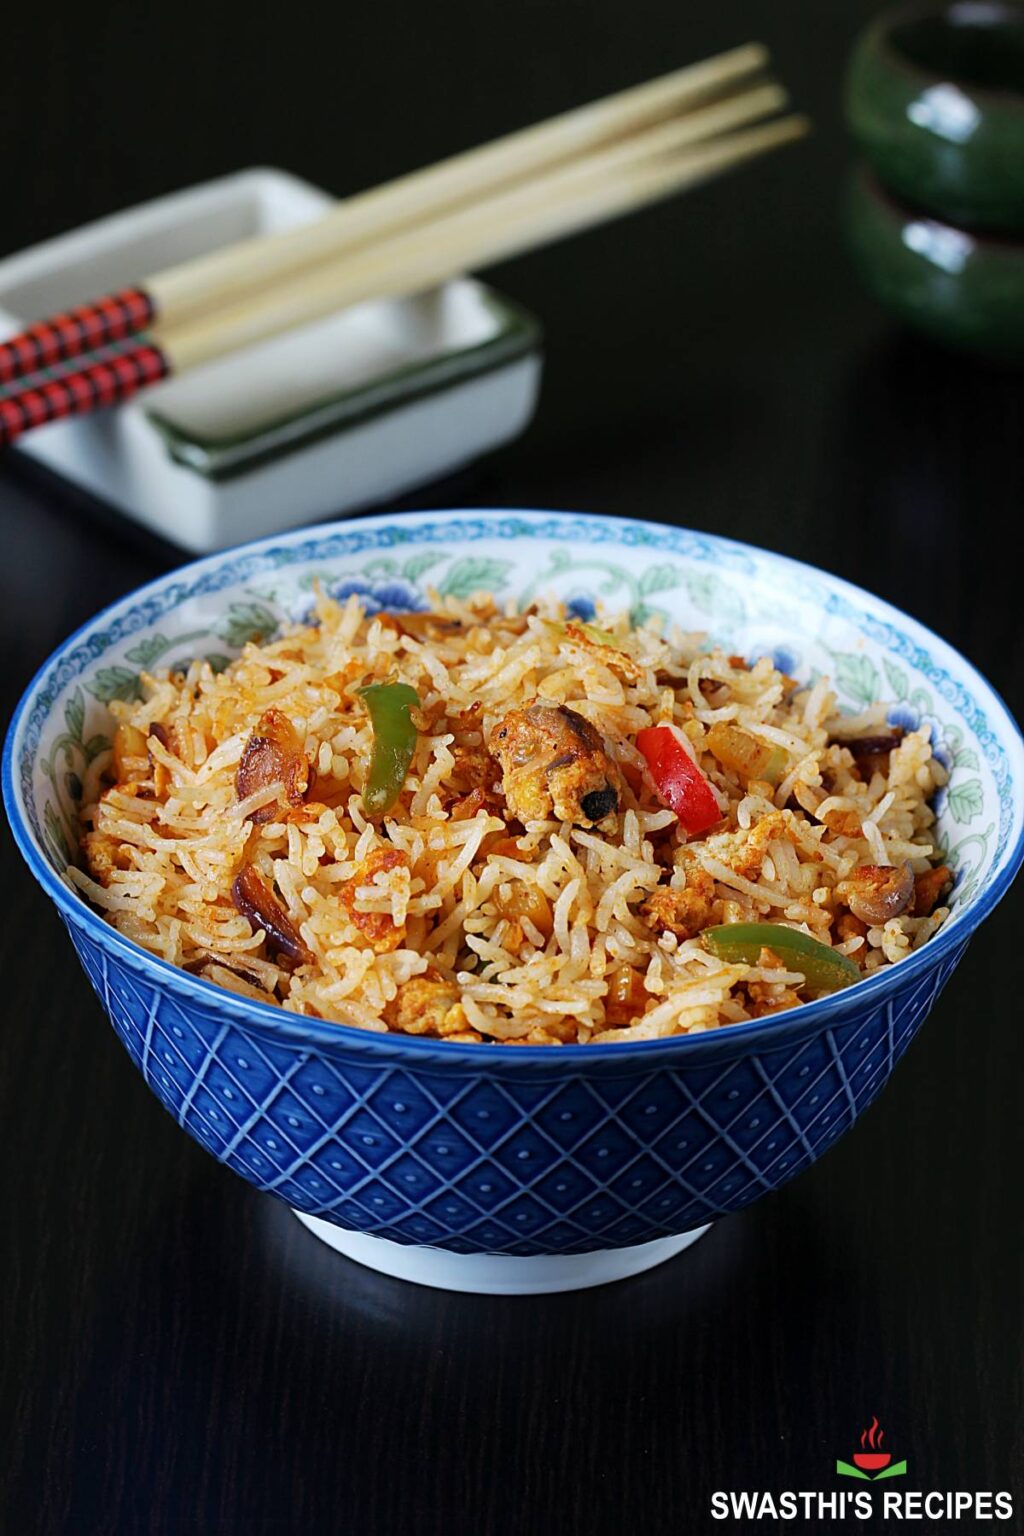 Egg fried rice (Chinese restaurant style) - Swasthi's Recipes